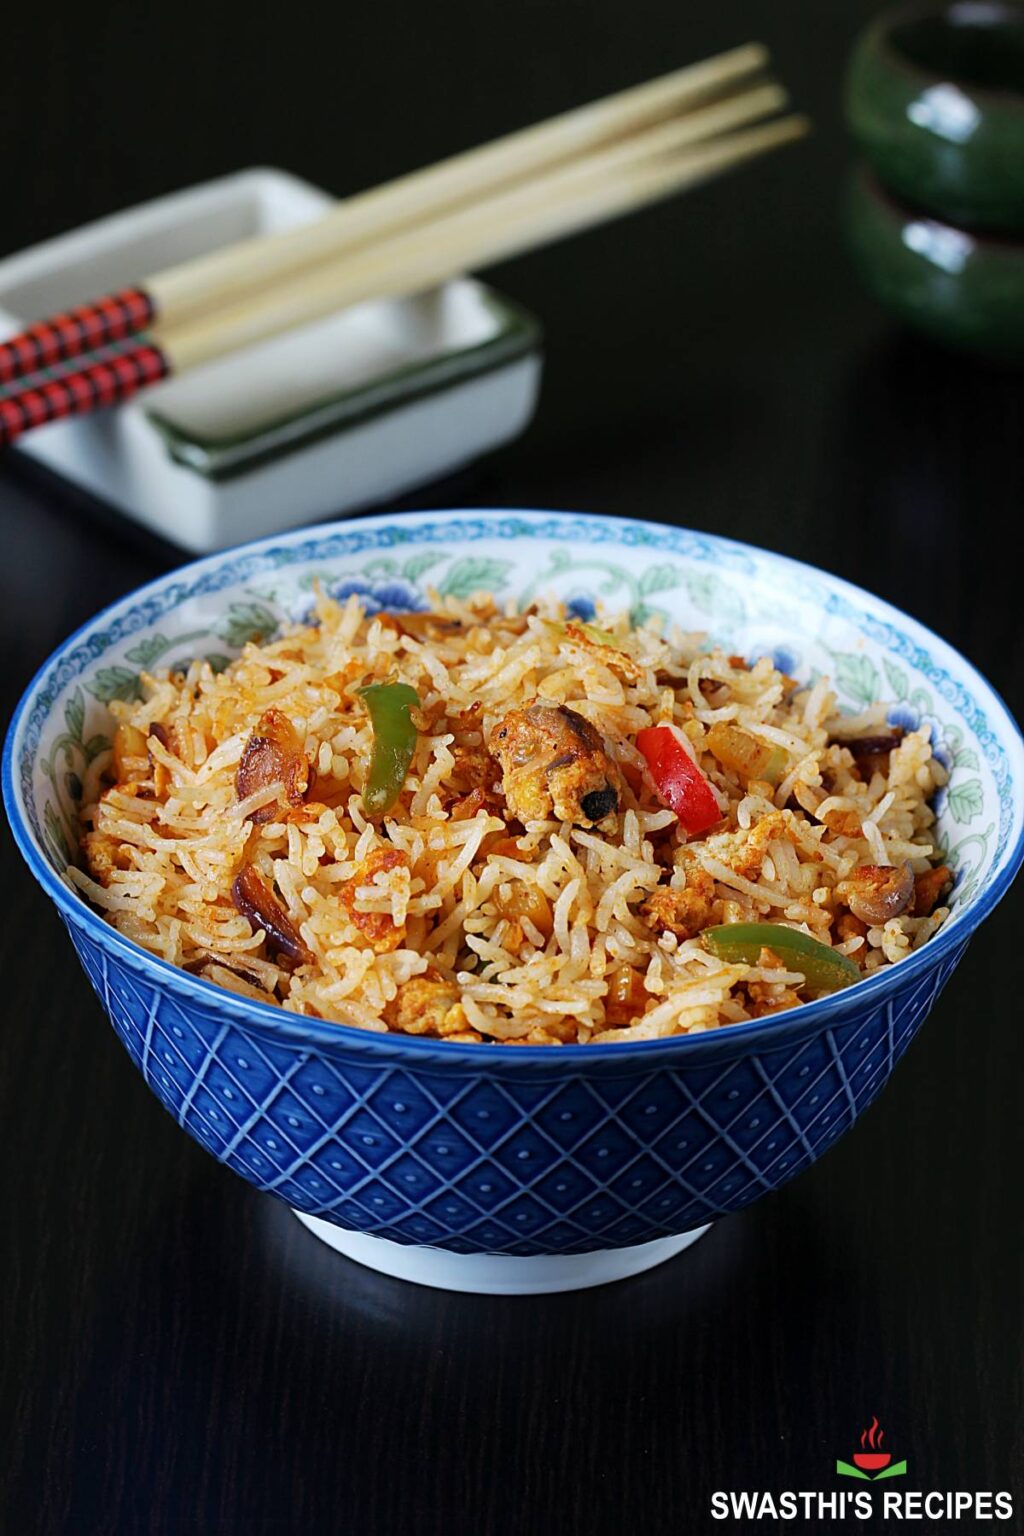 Egg fried rice (Chinese restaurant style) - Swasthi's Recipes